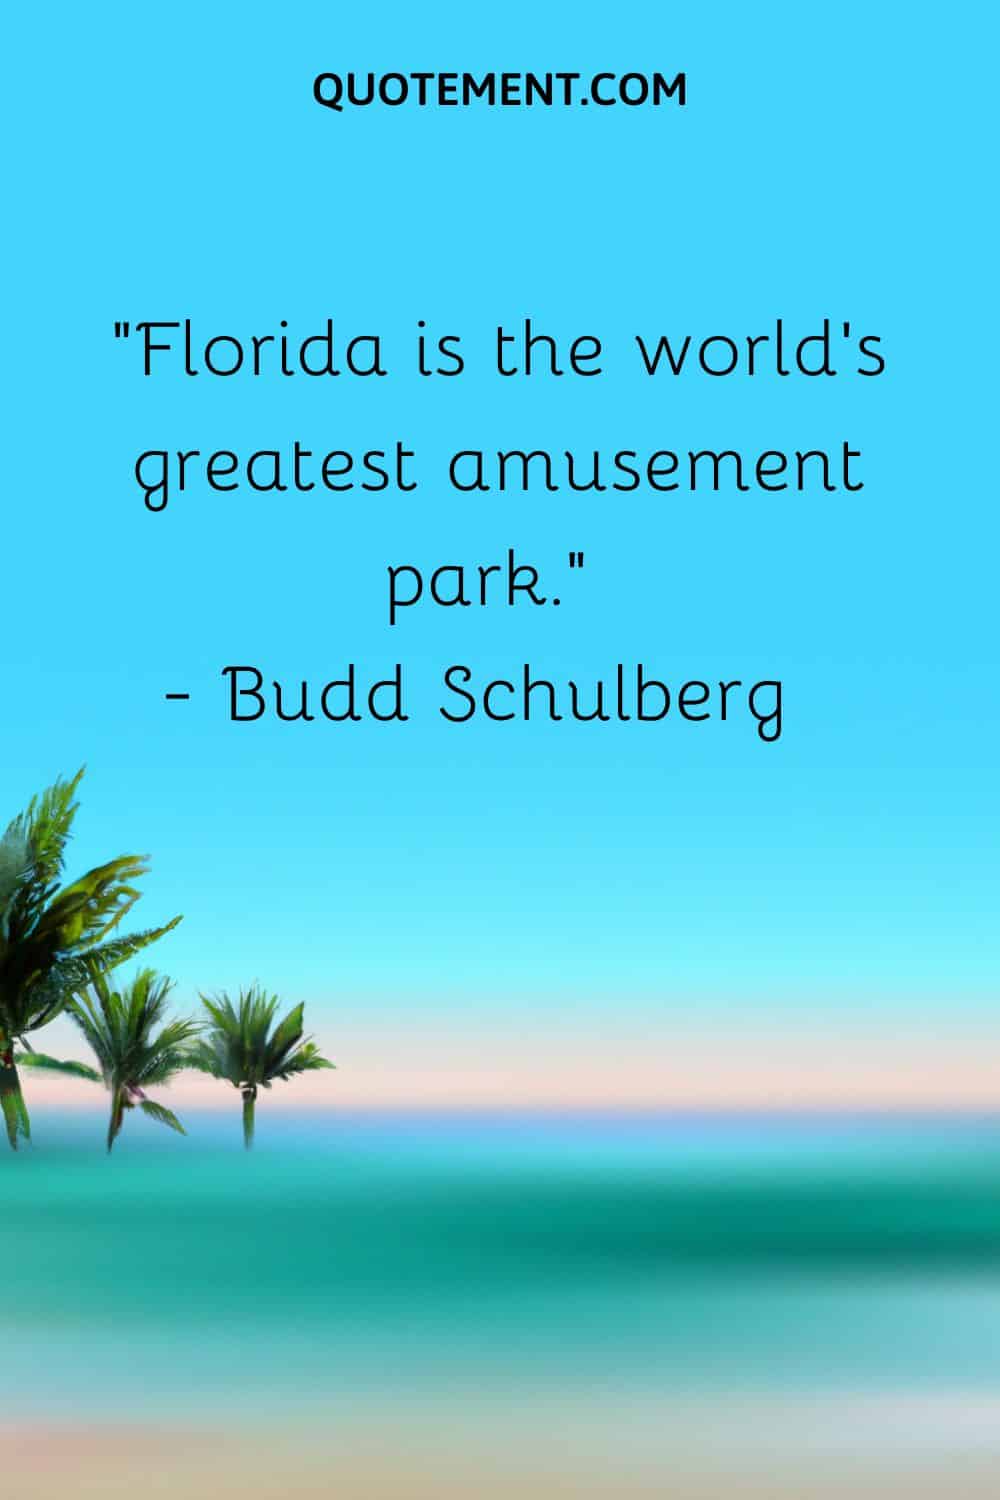 Florida is the world’s greatest amusement park